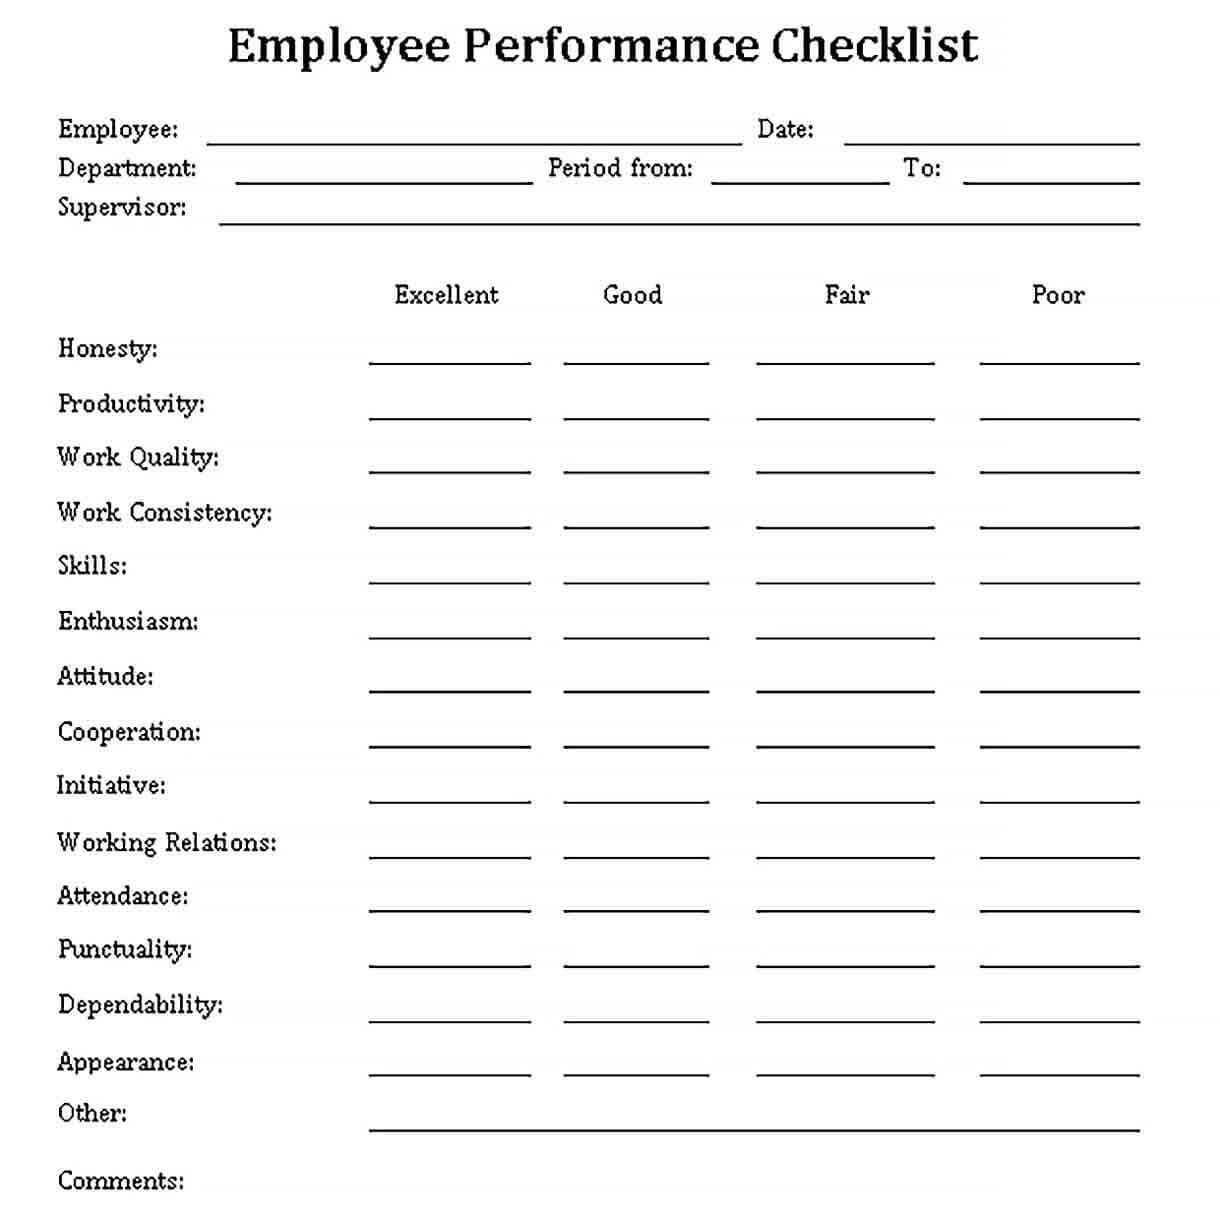 Sample Employee Performance Checklist